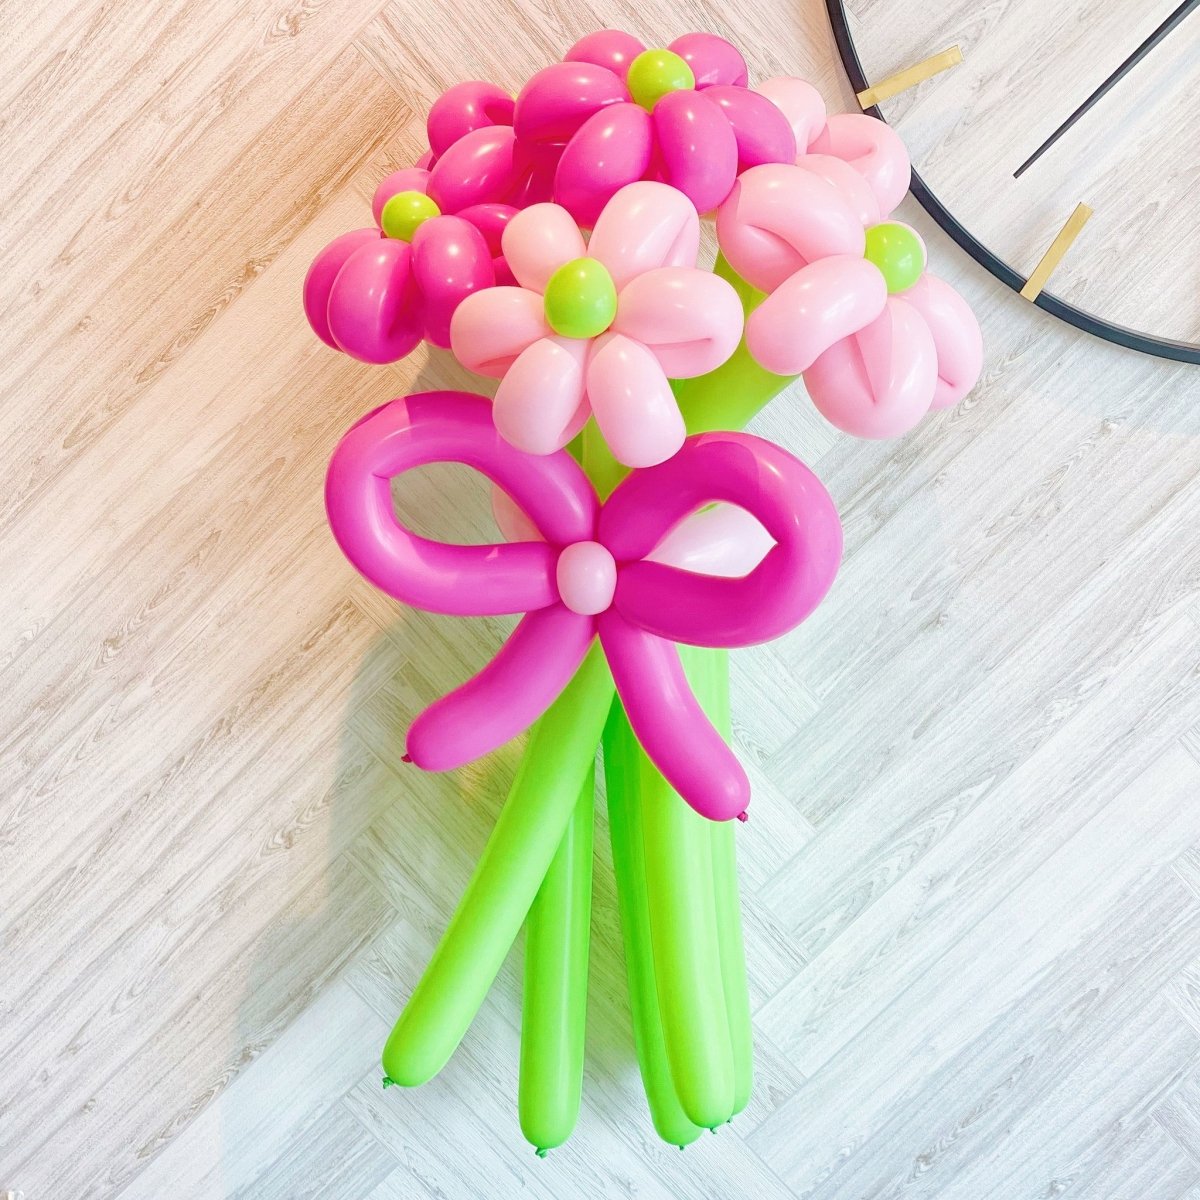 Elegant Classic Balloon Flower Bouquet (Large Size) - Rainbowly Fresh Fruit Gift and Flower Arrangments